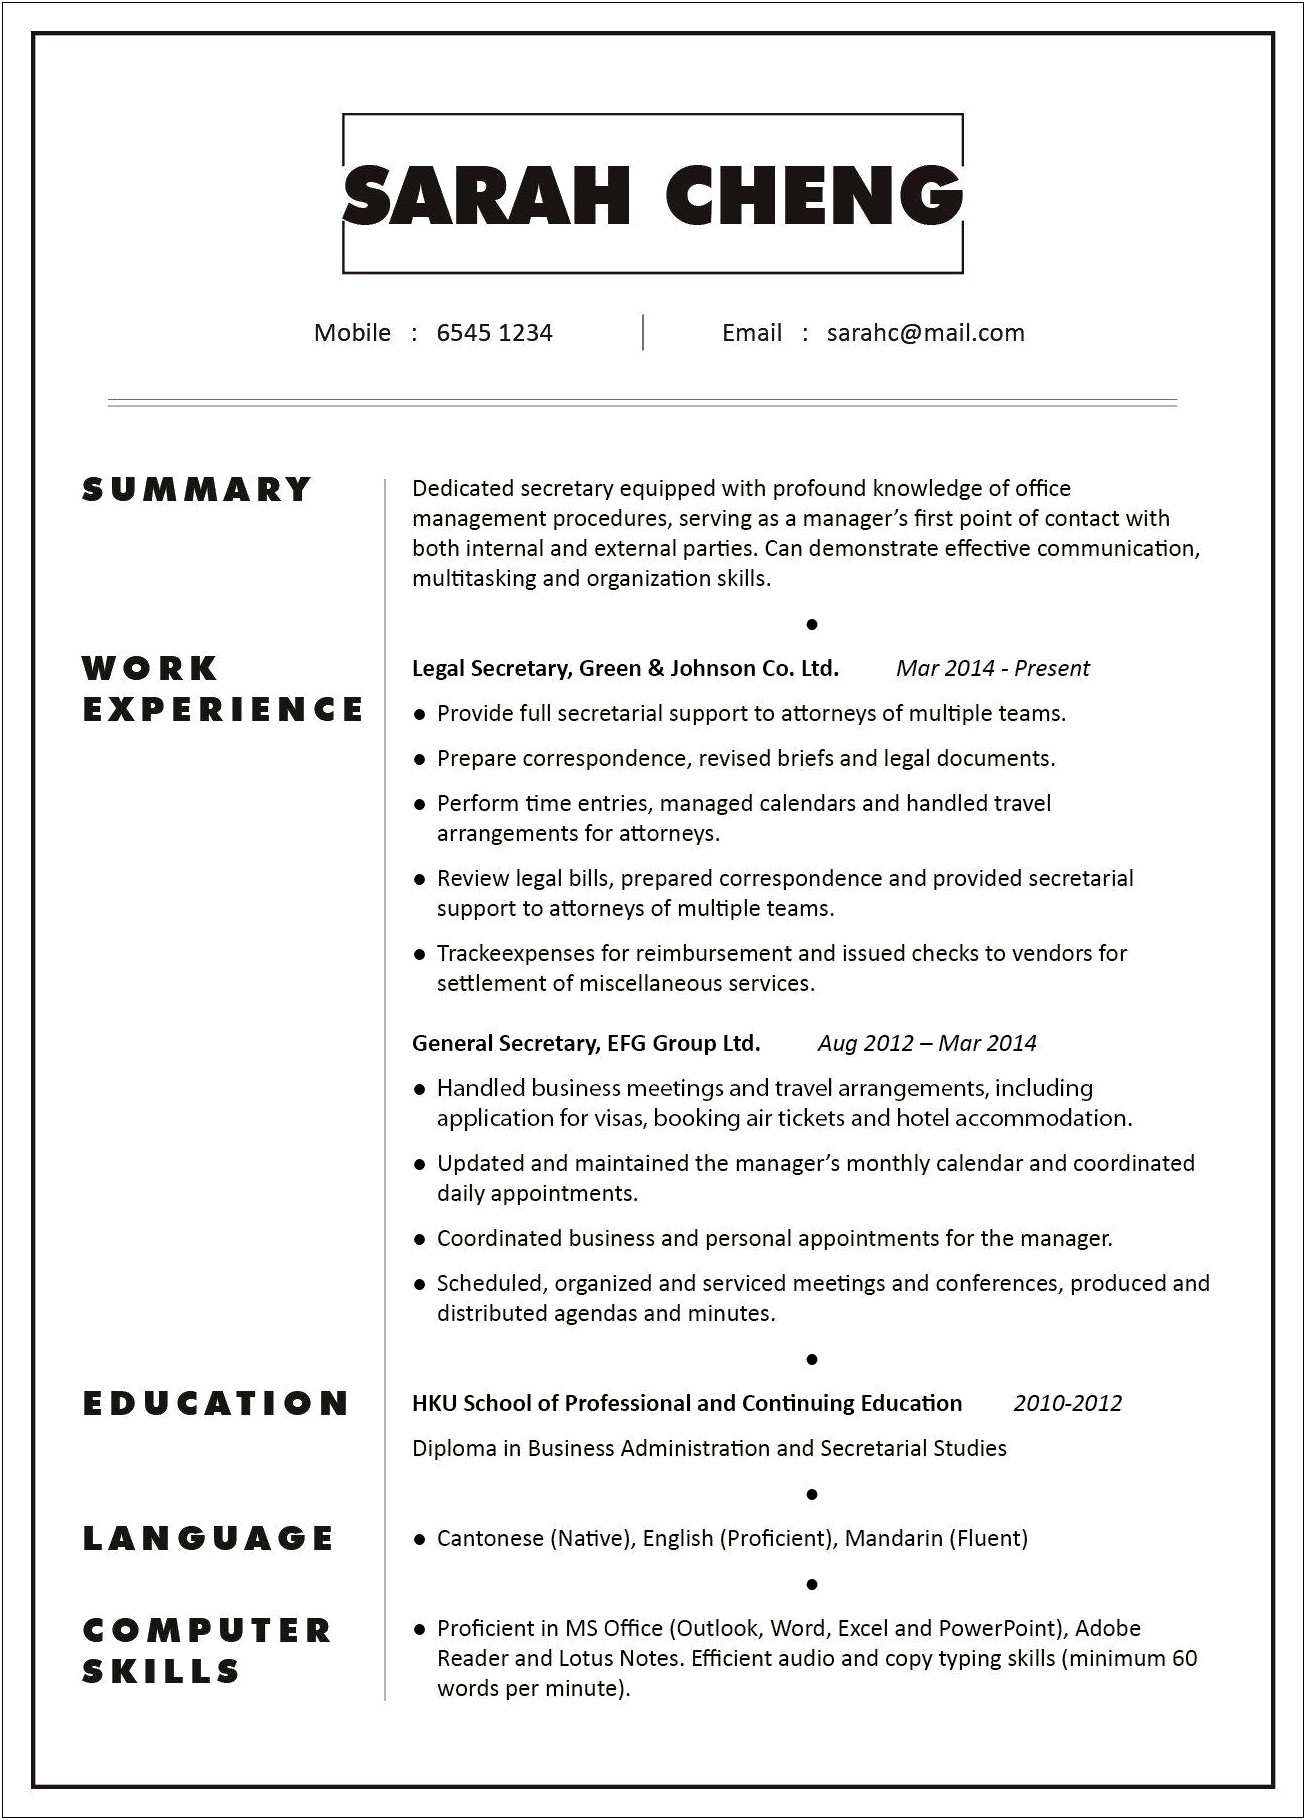 Administrative Ticket Retailer Broker Job Resume Description